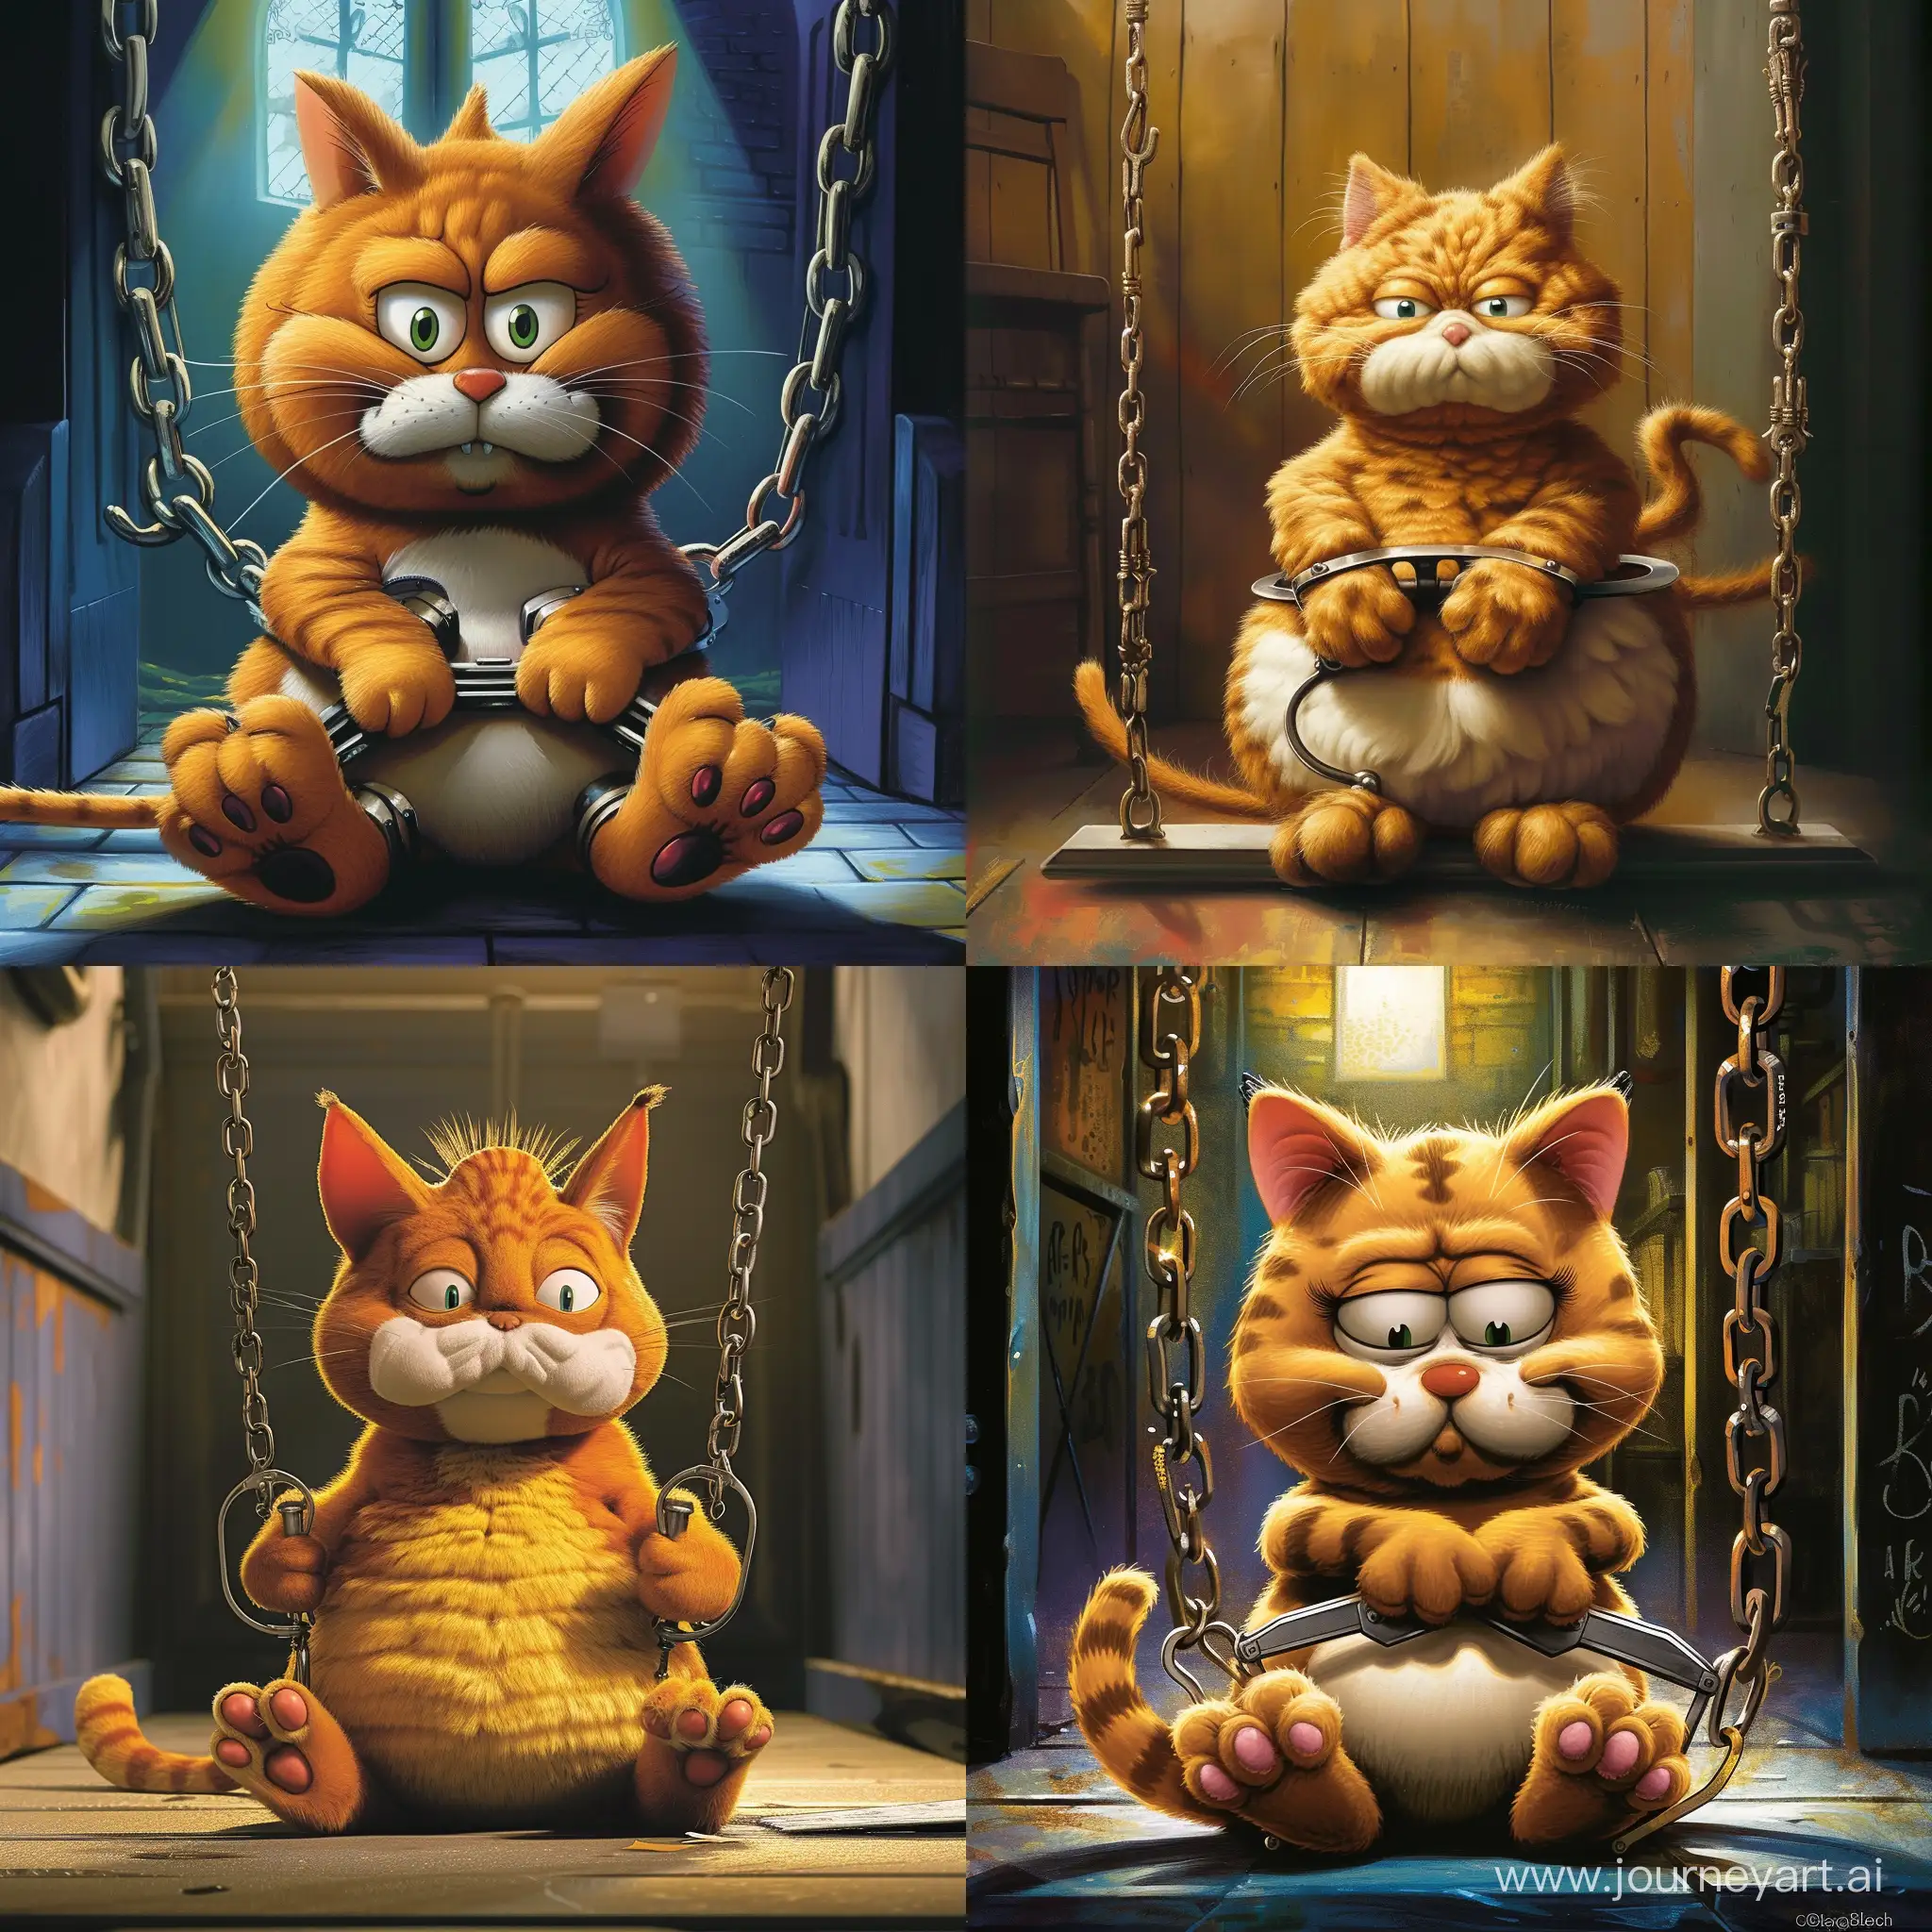 Overweight-Cat-Garfield-in-Handcuffs-Police-Capture-Scene